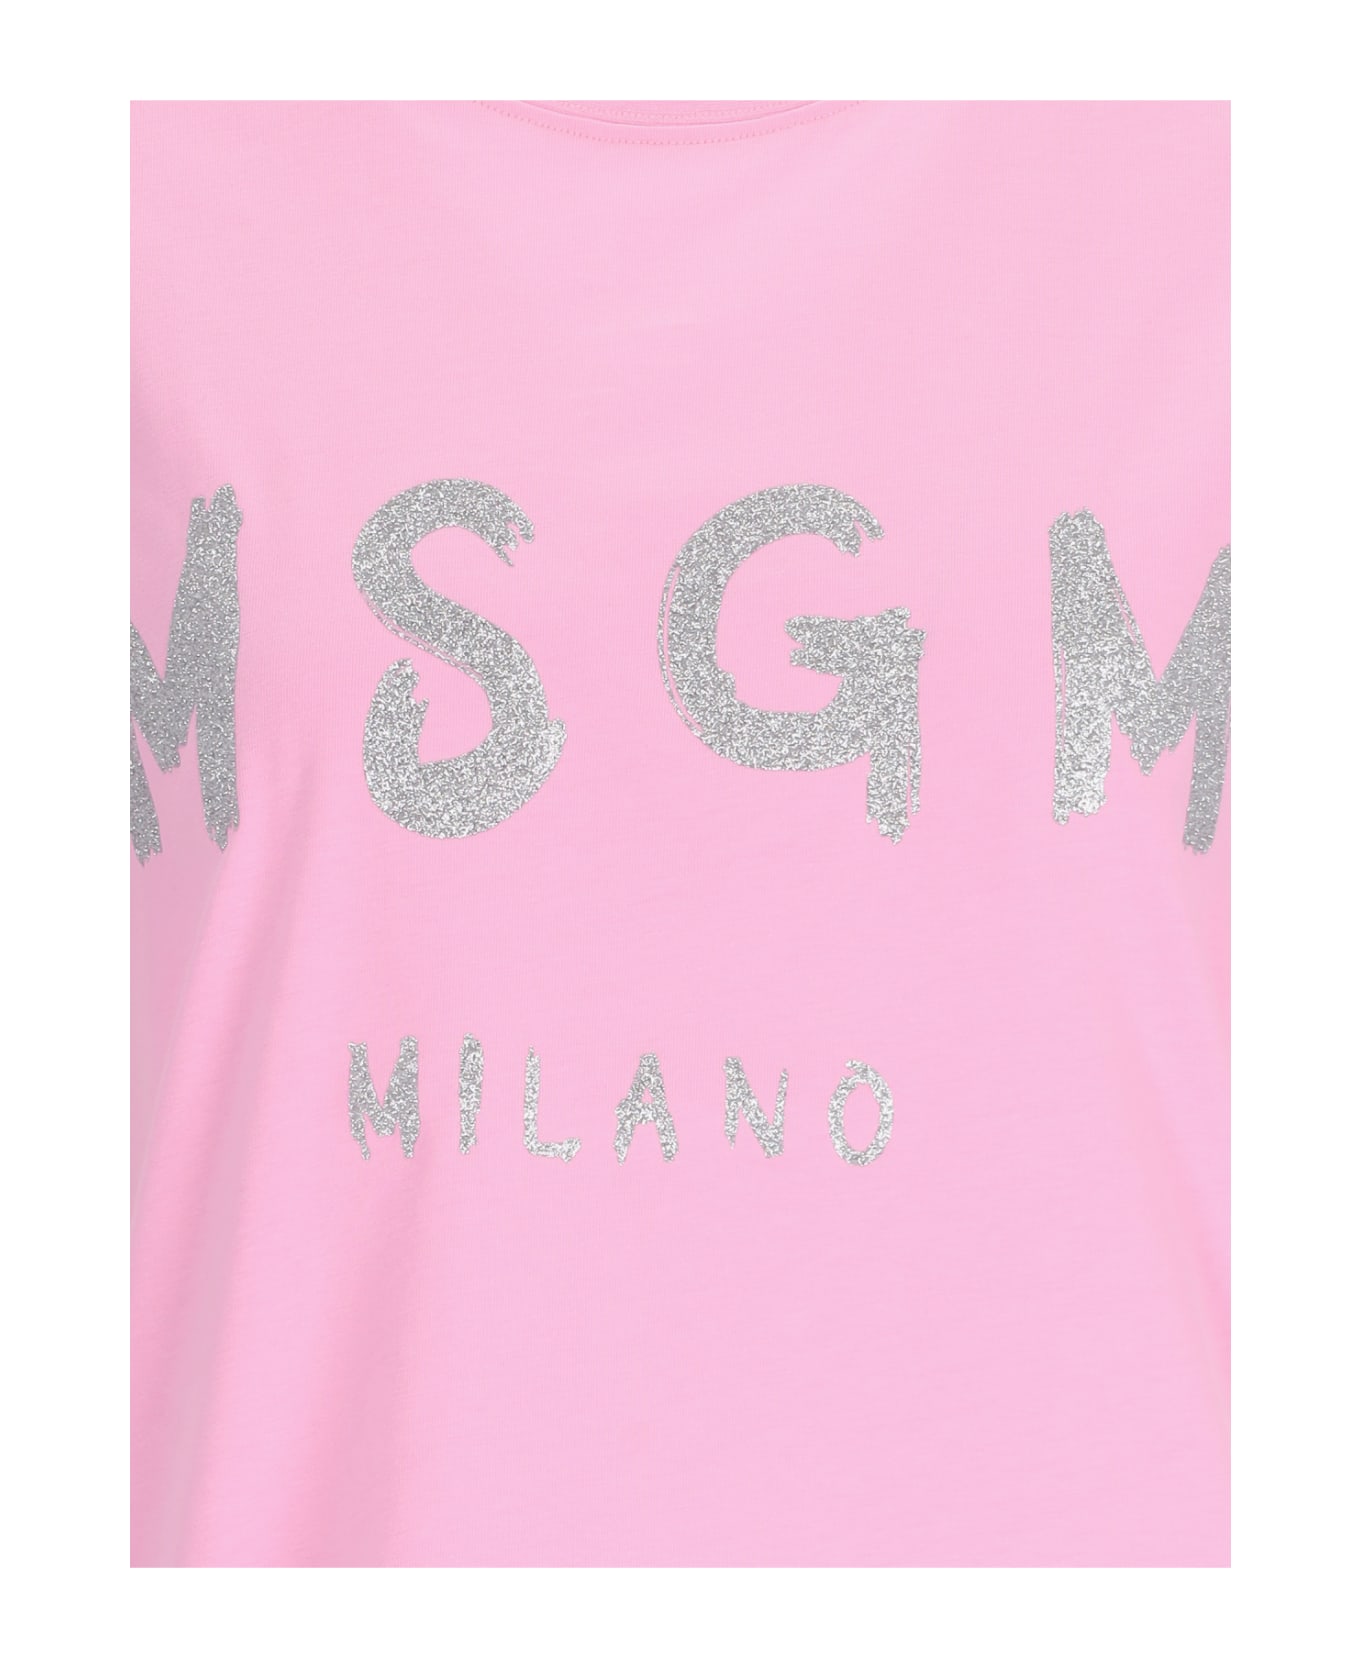 MSGM Logo T-shirt - Pink Tシャツ